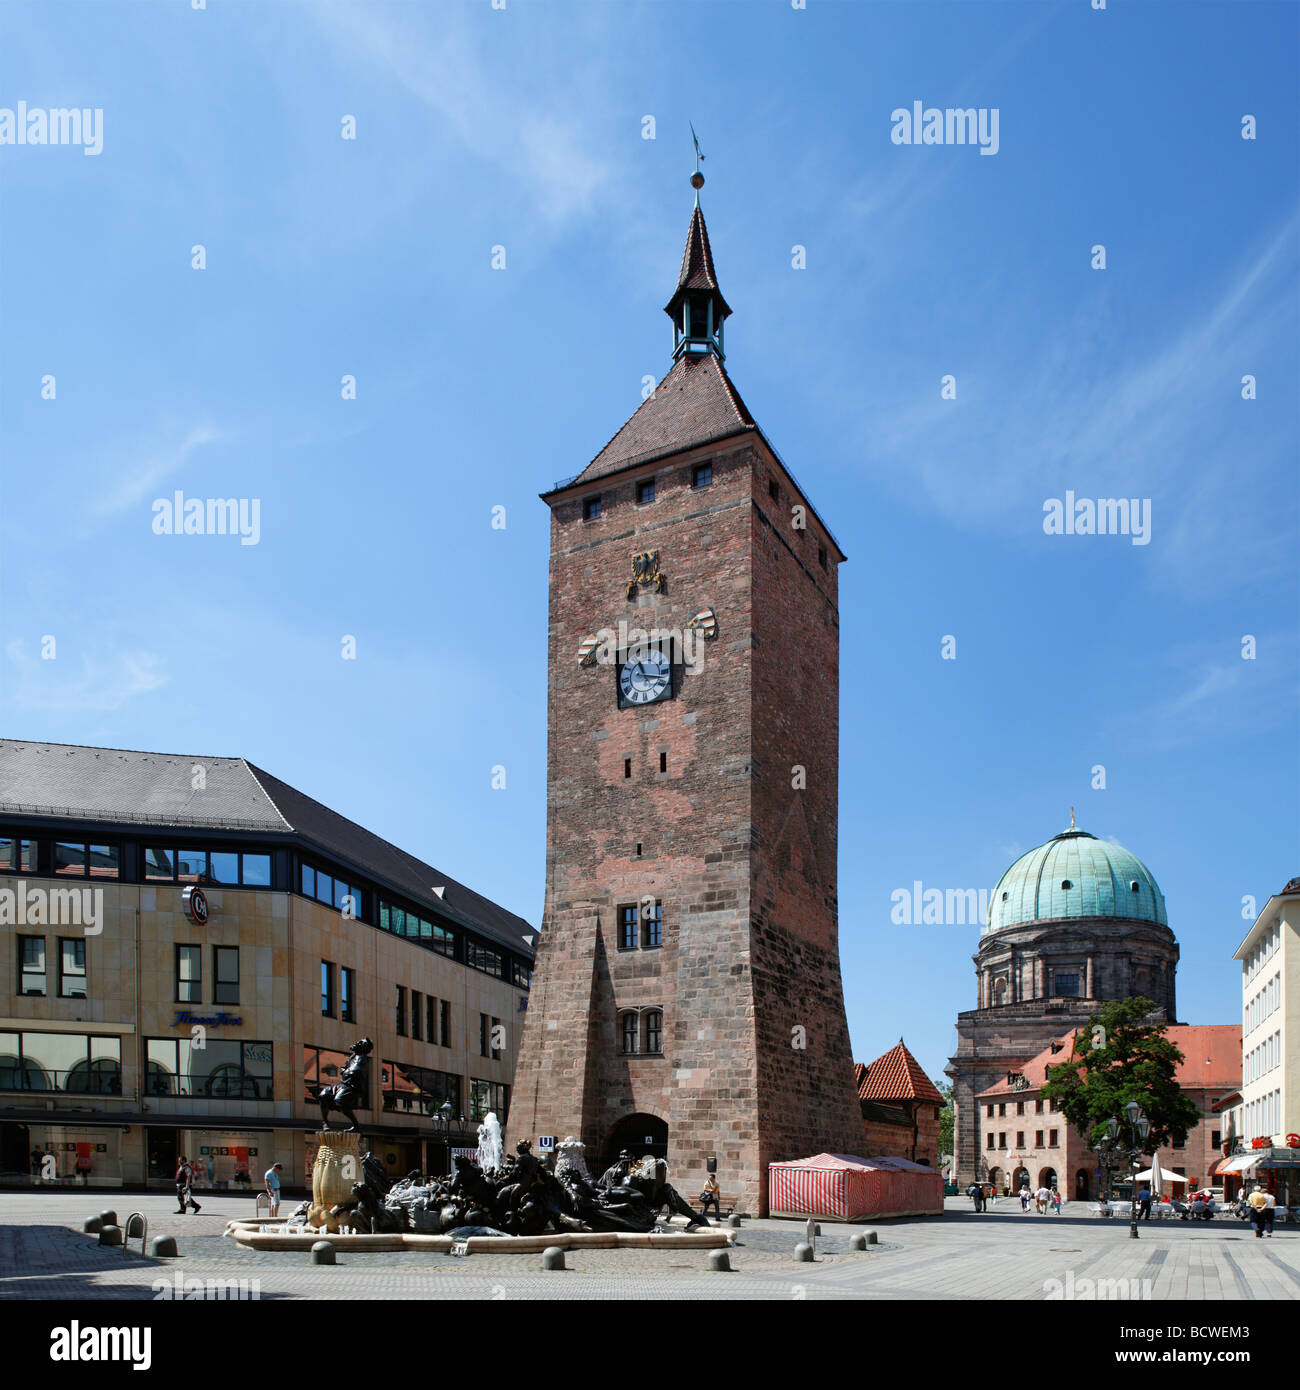 Weisser Turm, Torre Bianca, costruito ca. 1250, 'Ehekarusell' Fontana, Ludwigsplatz square, Santa Elisabetta chiesa, a cupola, storico ci Foto Stock